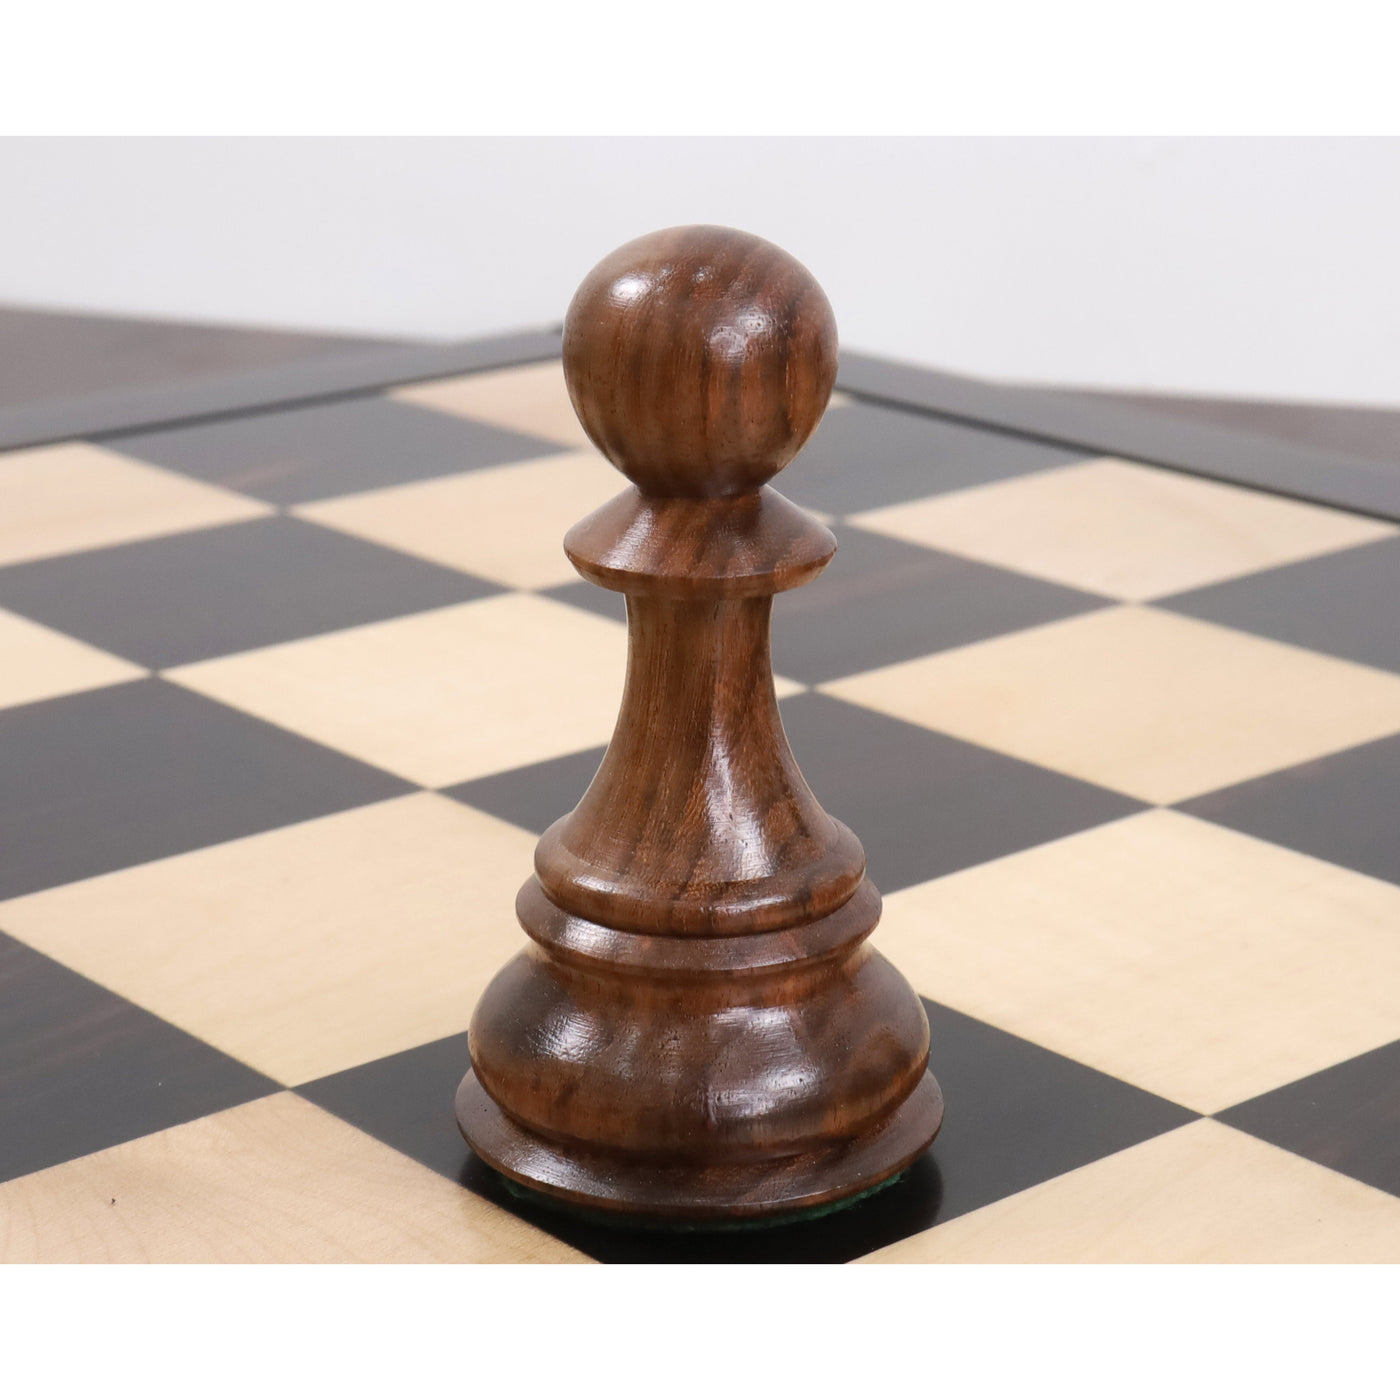 6.3" Jumbo Pro Staunton Luxury Chess Set - Chess Pieces Only - Golden Rosewood & Boxwood